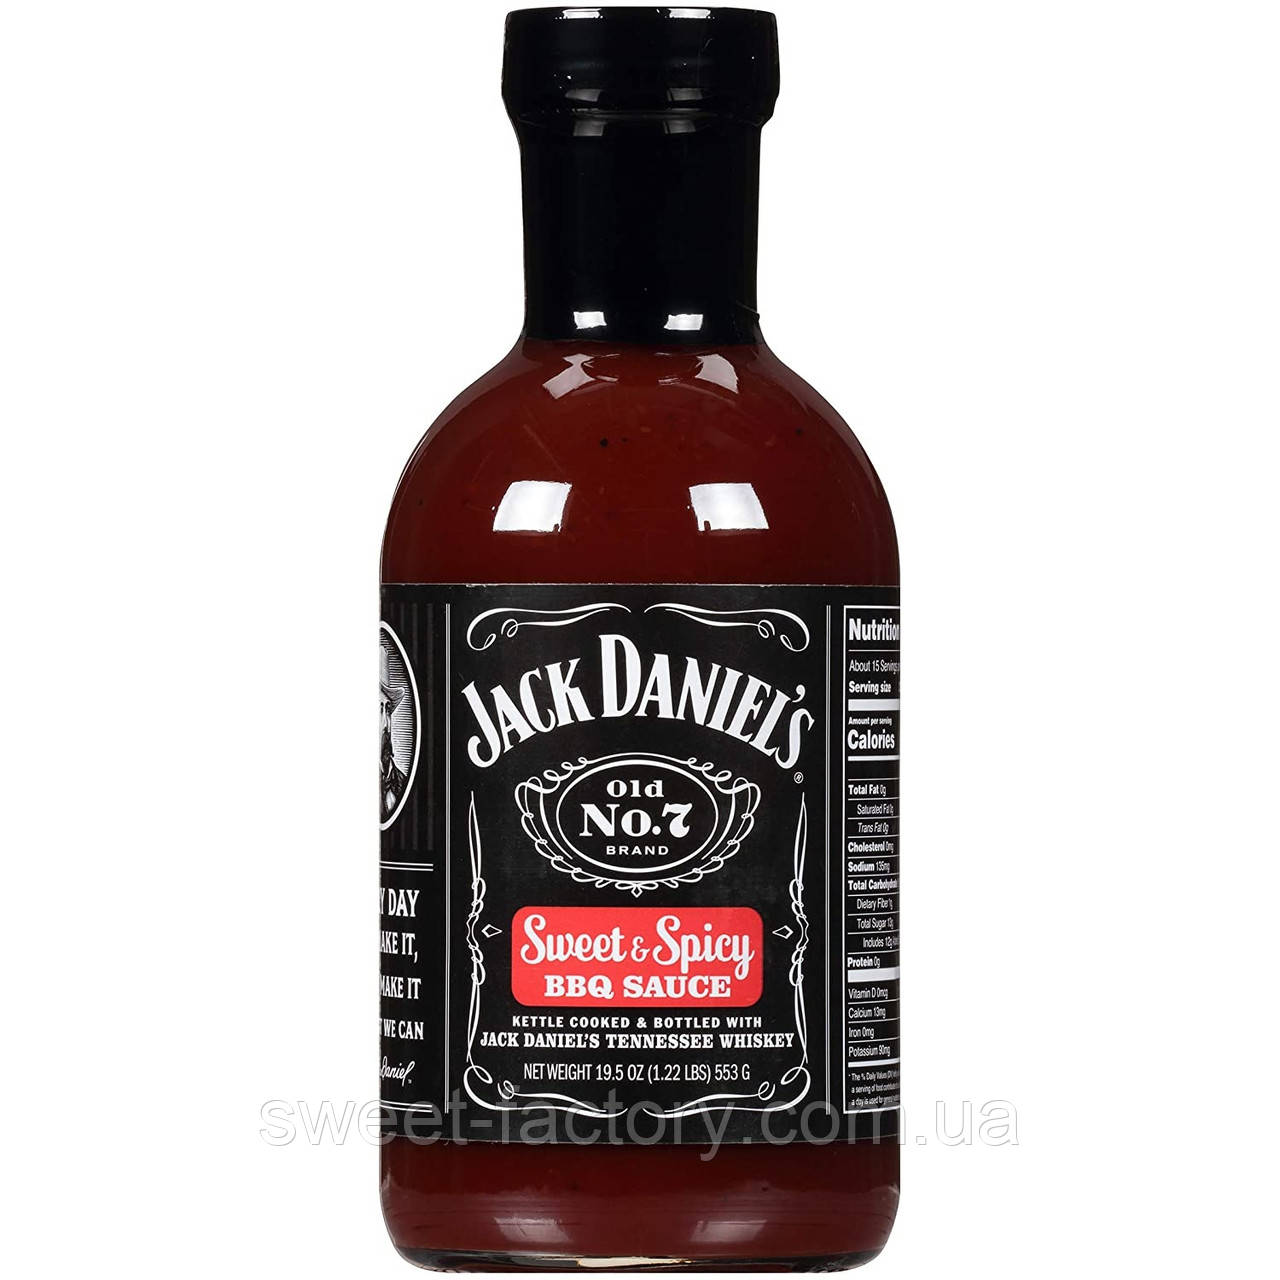 Соус Jack Daniel's Sweet & Spicy BBQ sauce 473ml